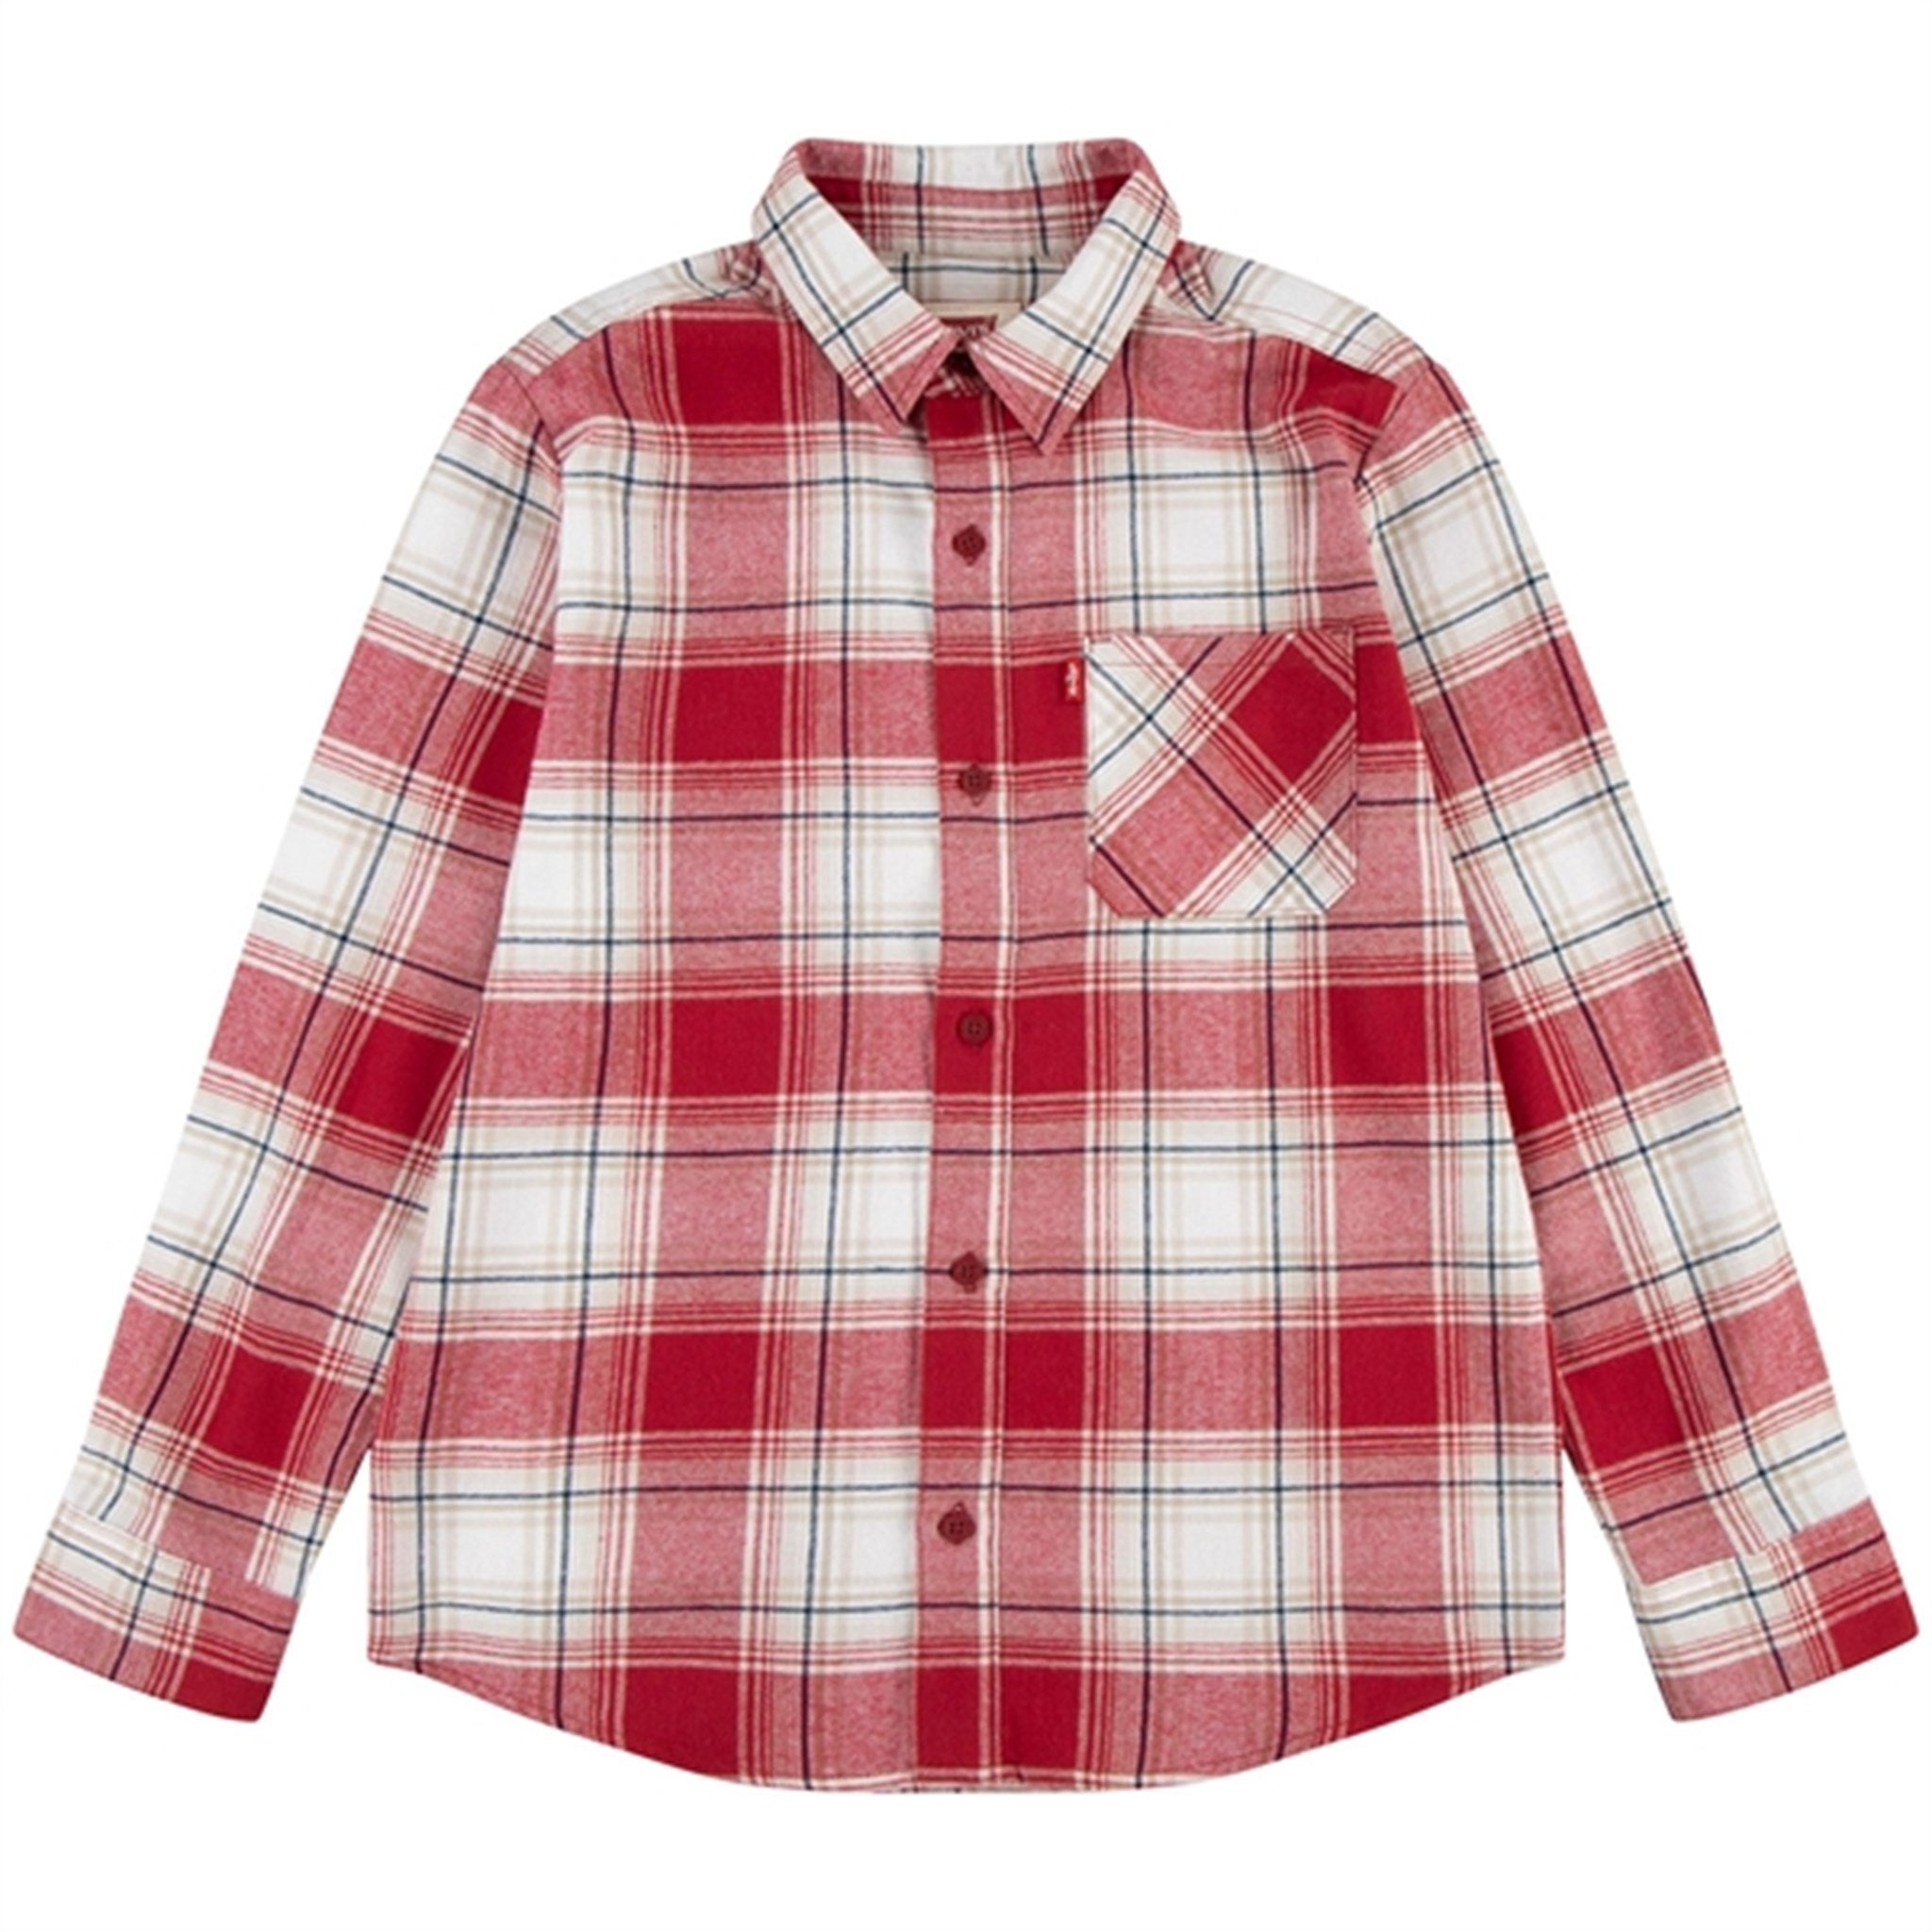 Levi's Plaid Flannel Pocket Shirt Rhythmic Red